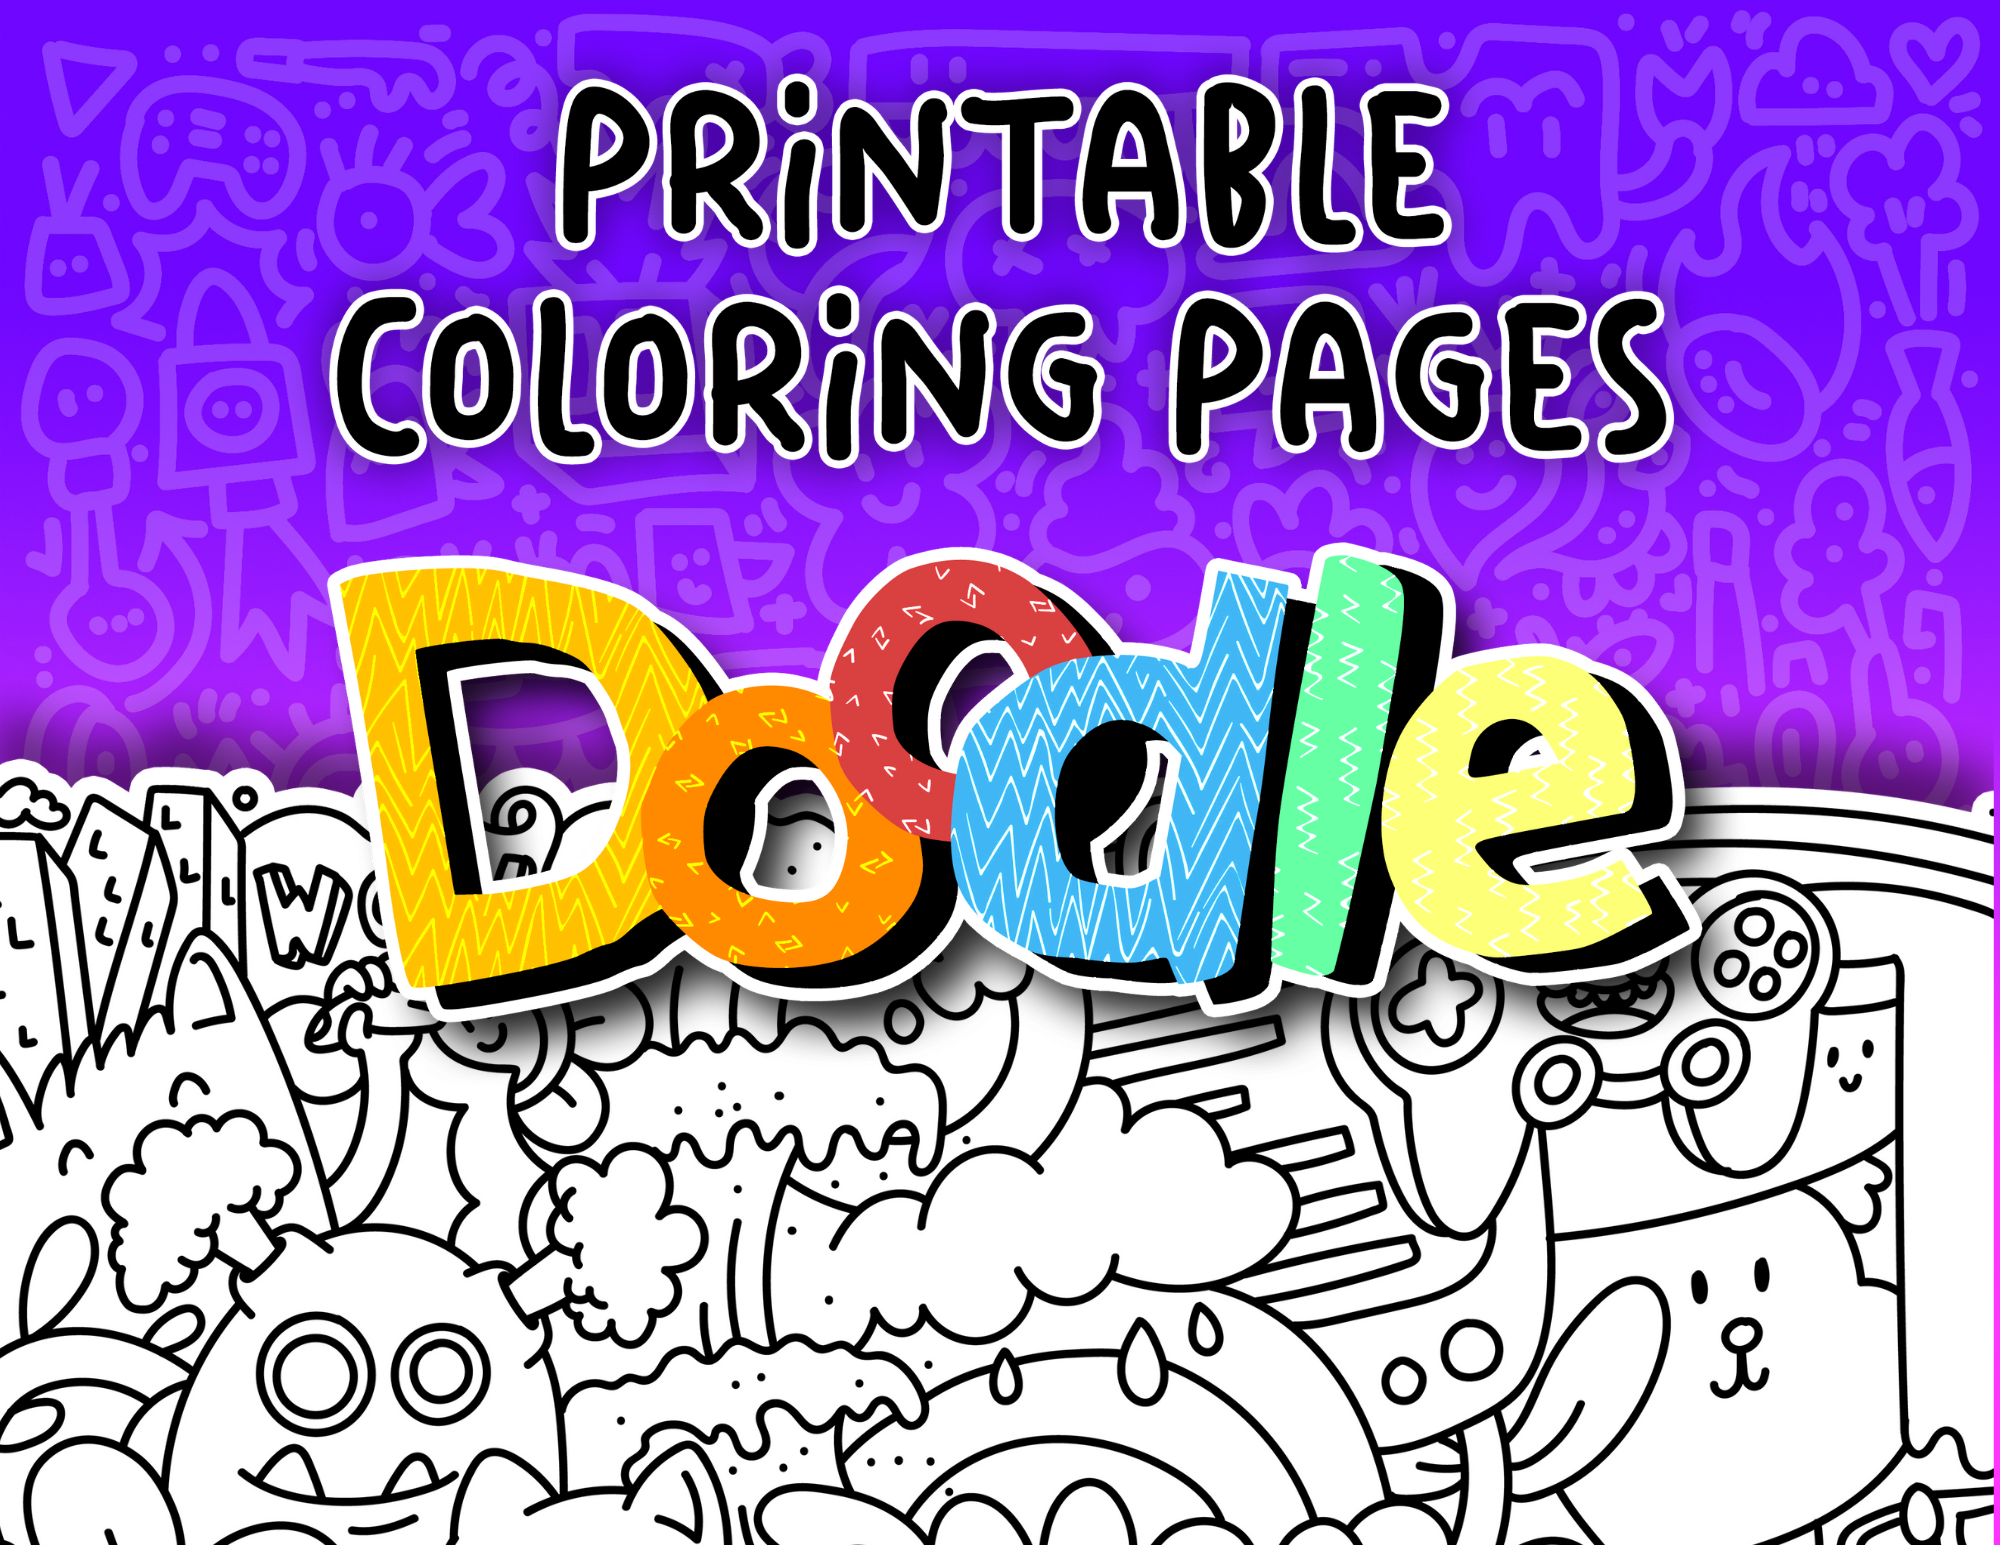 Printable (Digital) Doodles Coloring Pages: FunDoodles Printable Coloring Book for All Ages